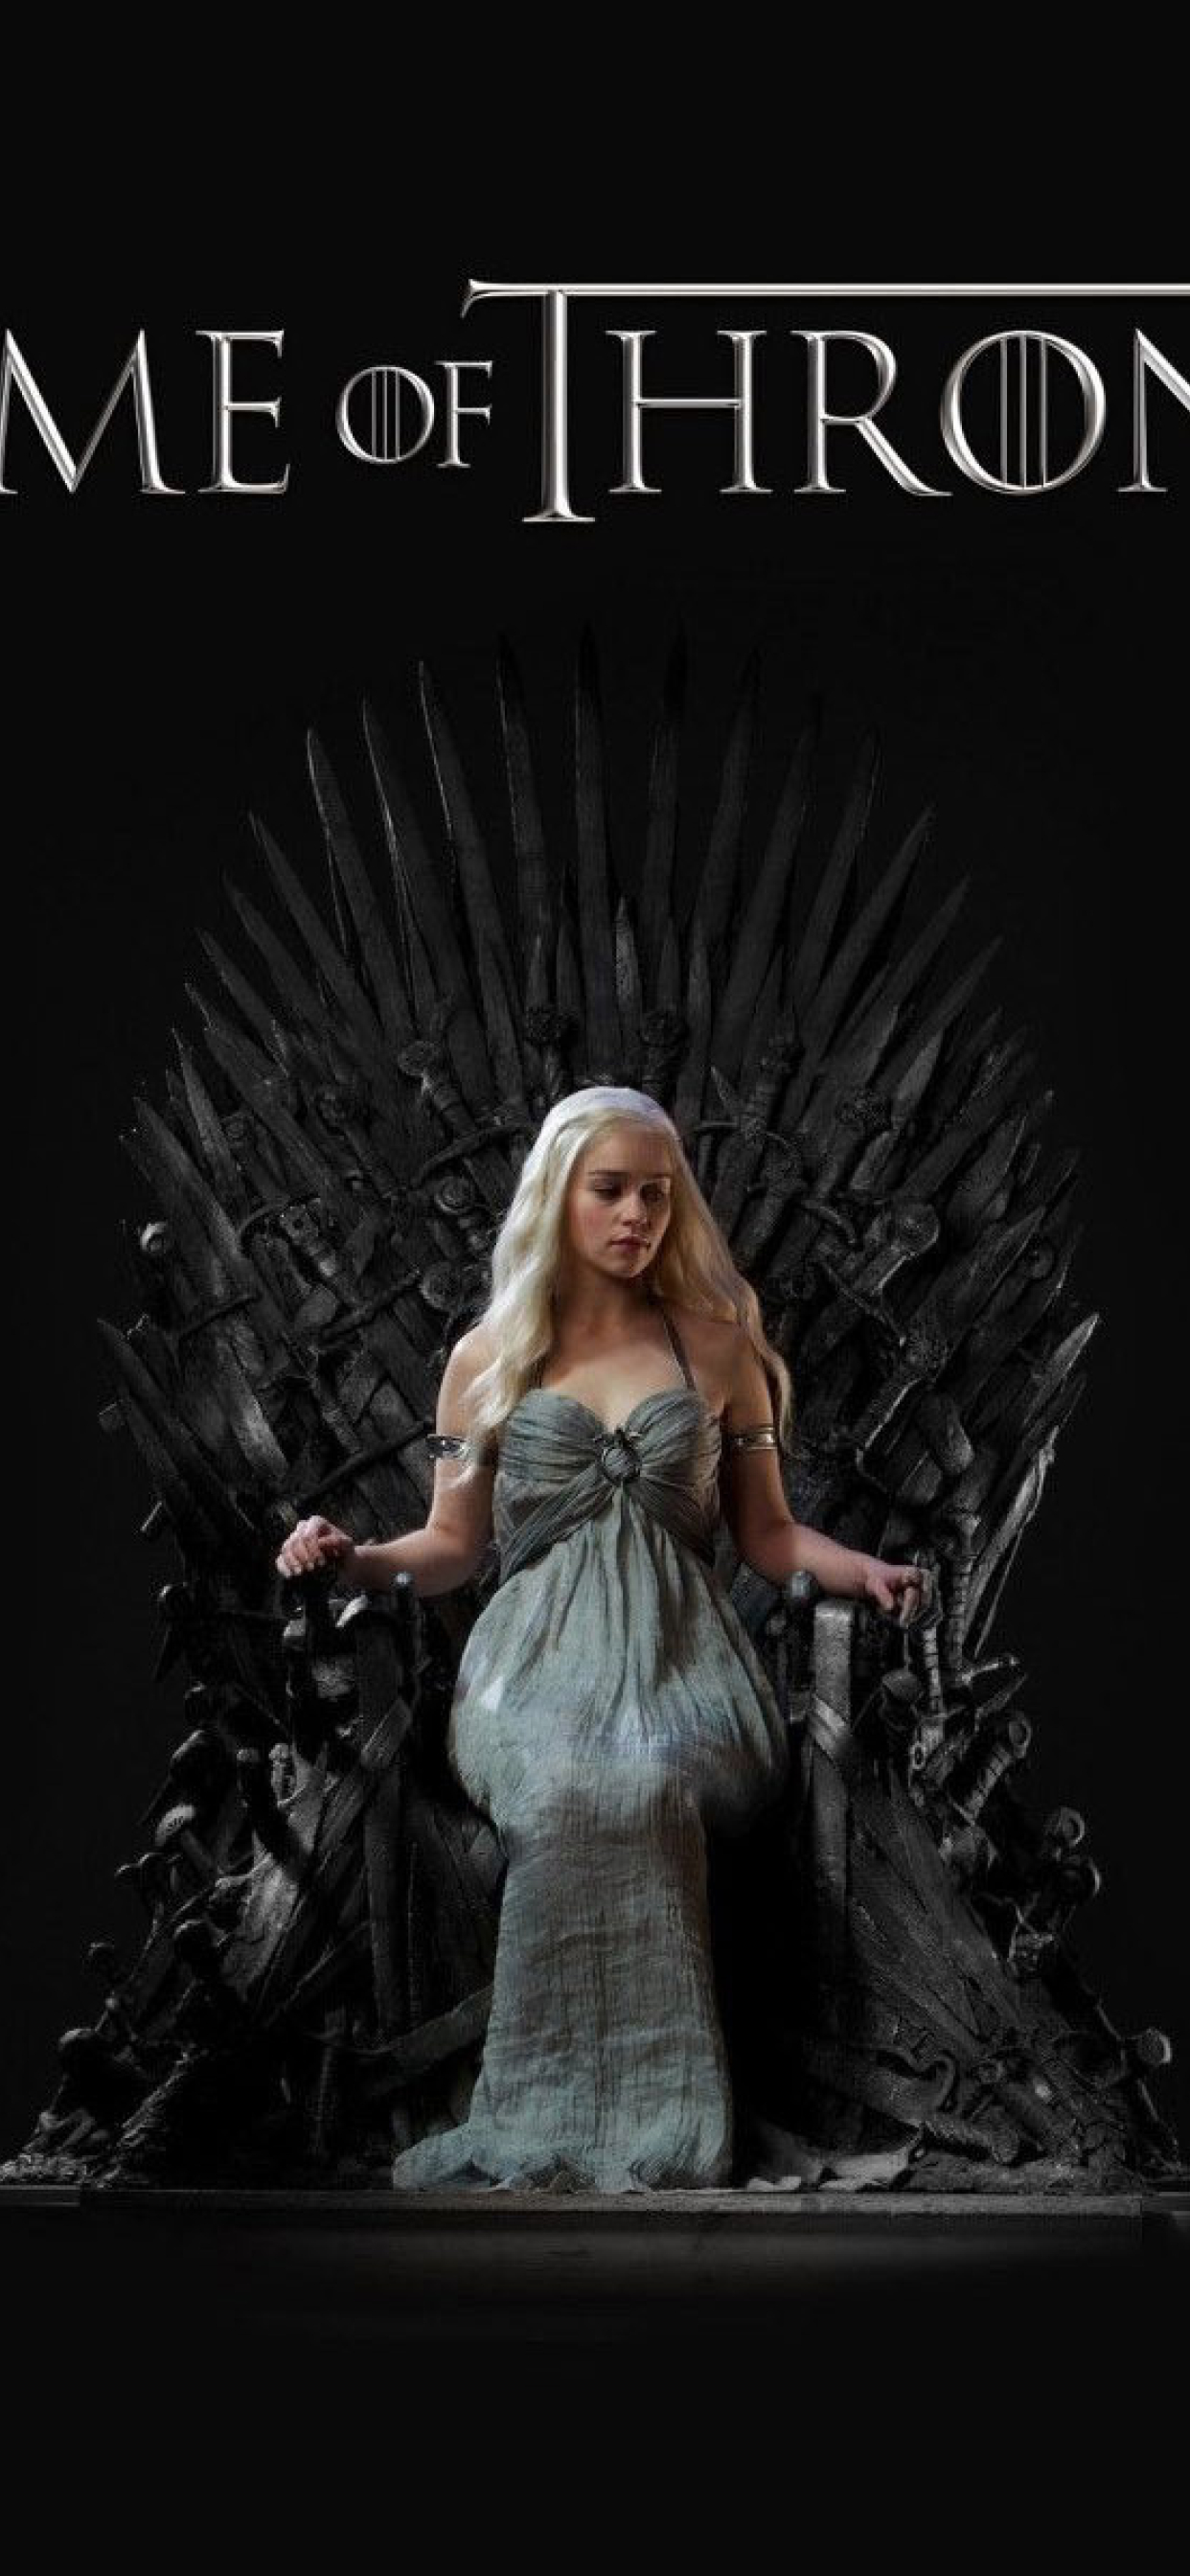 Daenerys Targaryen from Game of Thrones  Download Free HD Mobile Wallpapers